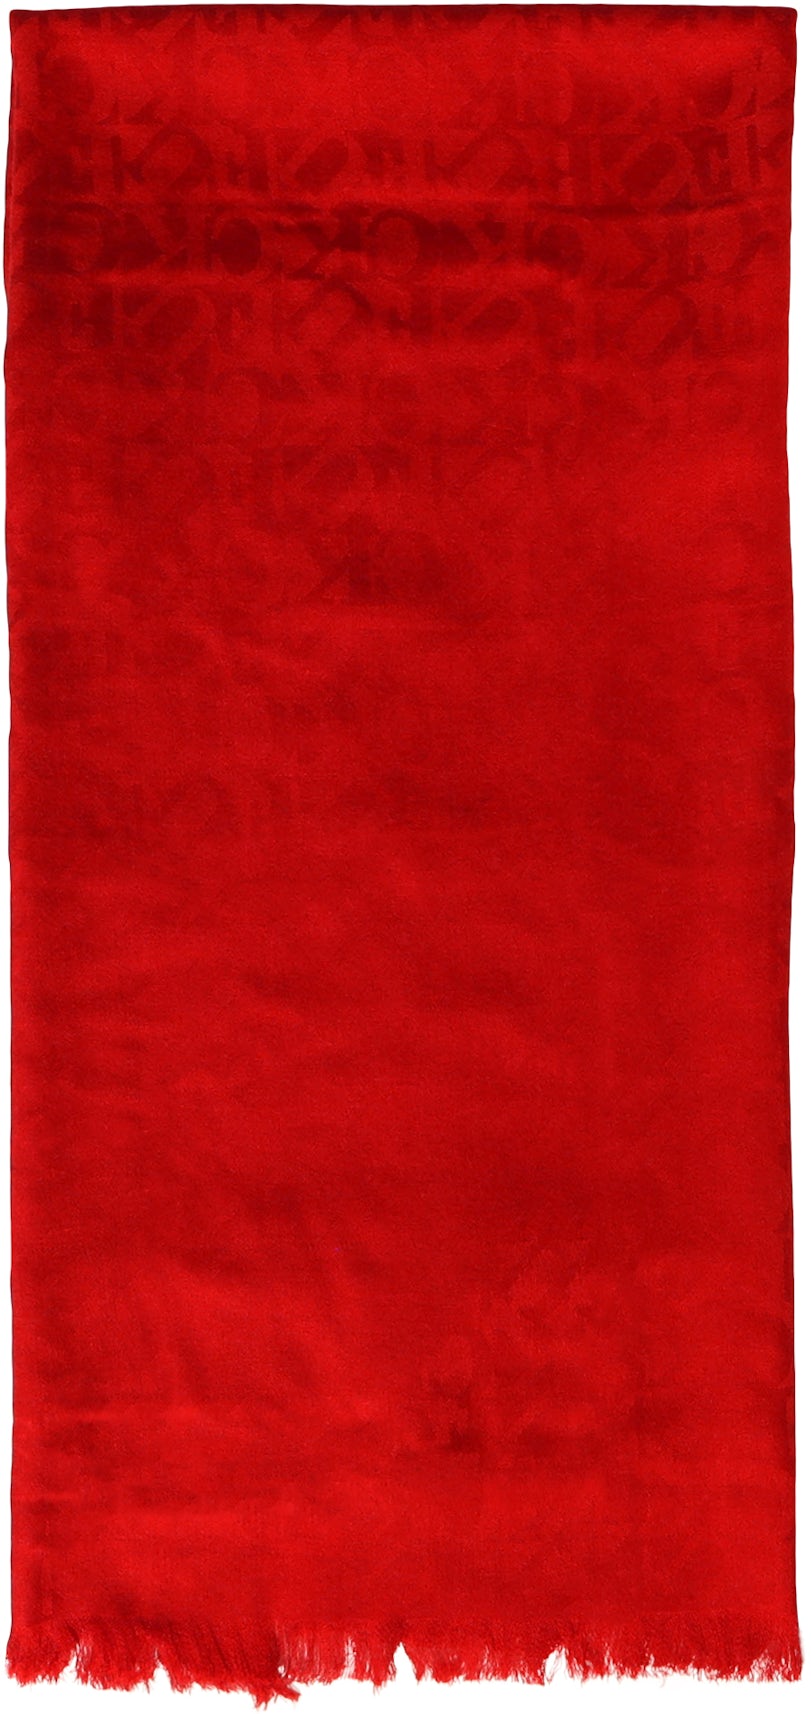 Louis Vuitton x Supreme 2017 Monogram Wool Cashmere Scarf - Red